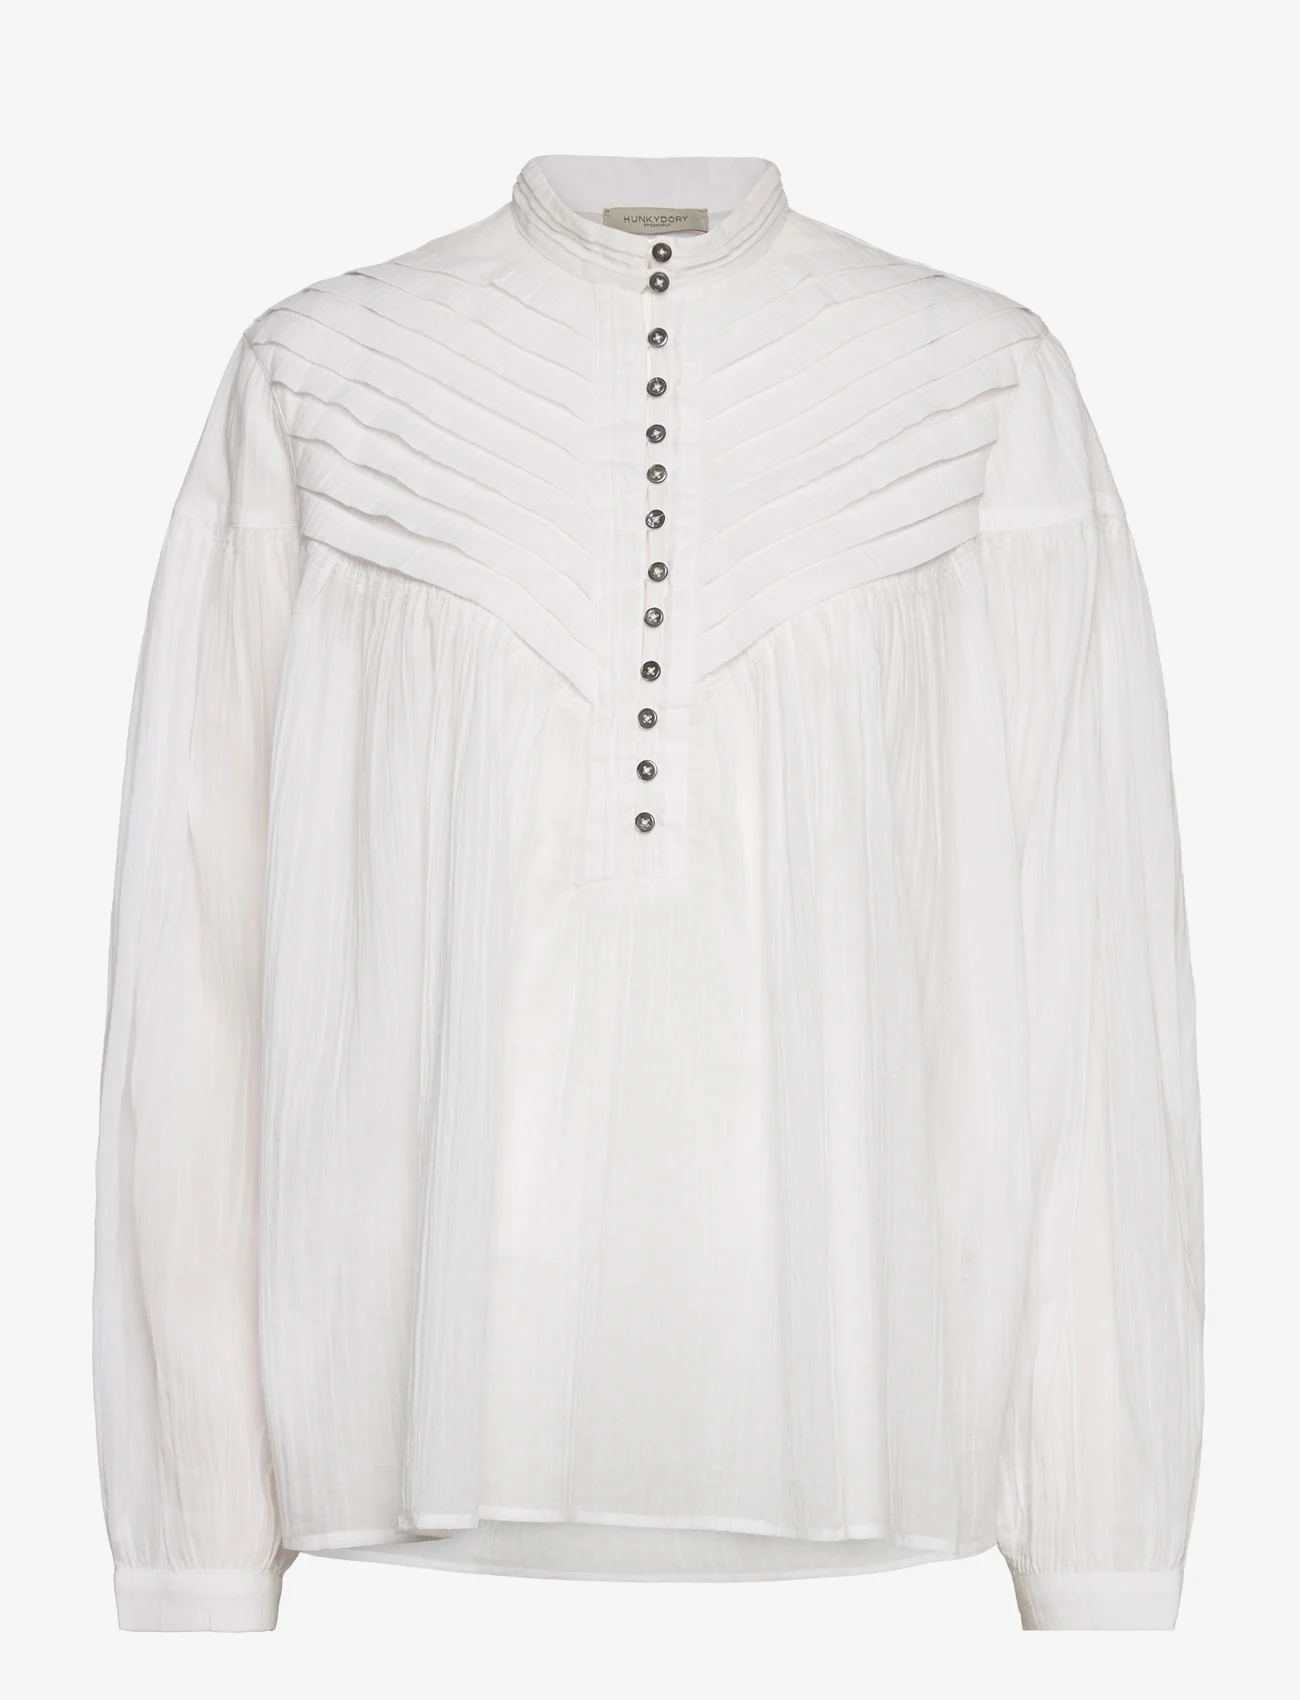 HUNKYDORY - Etty Blouse - blouses met lange mouwen - frosty chalk - 0